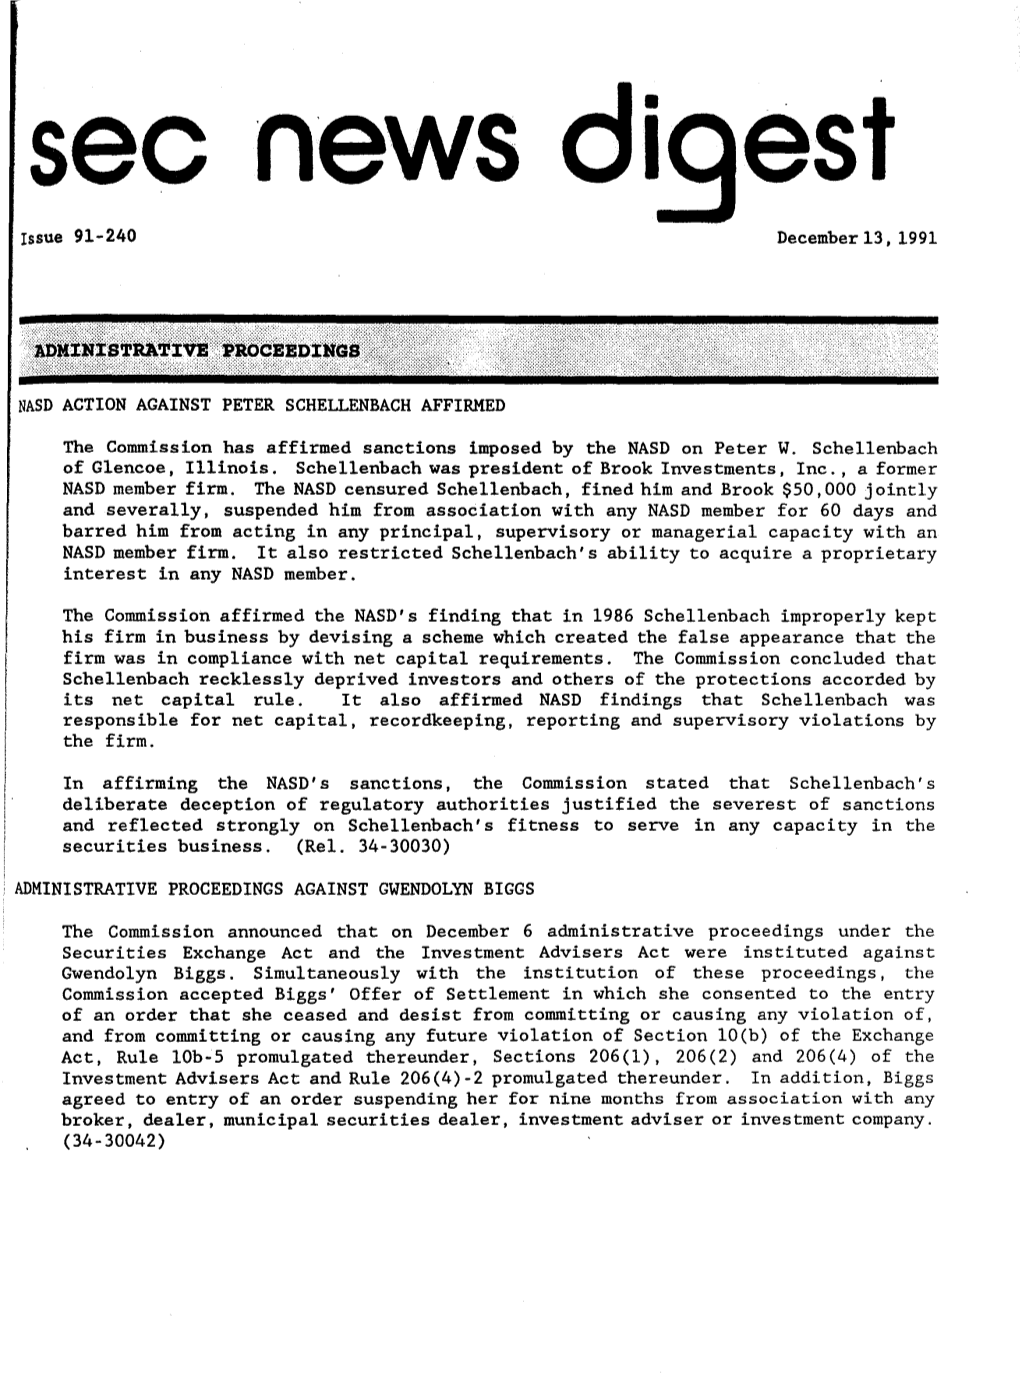 SEC News Digest, 12-13-1991